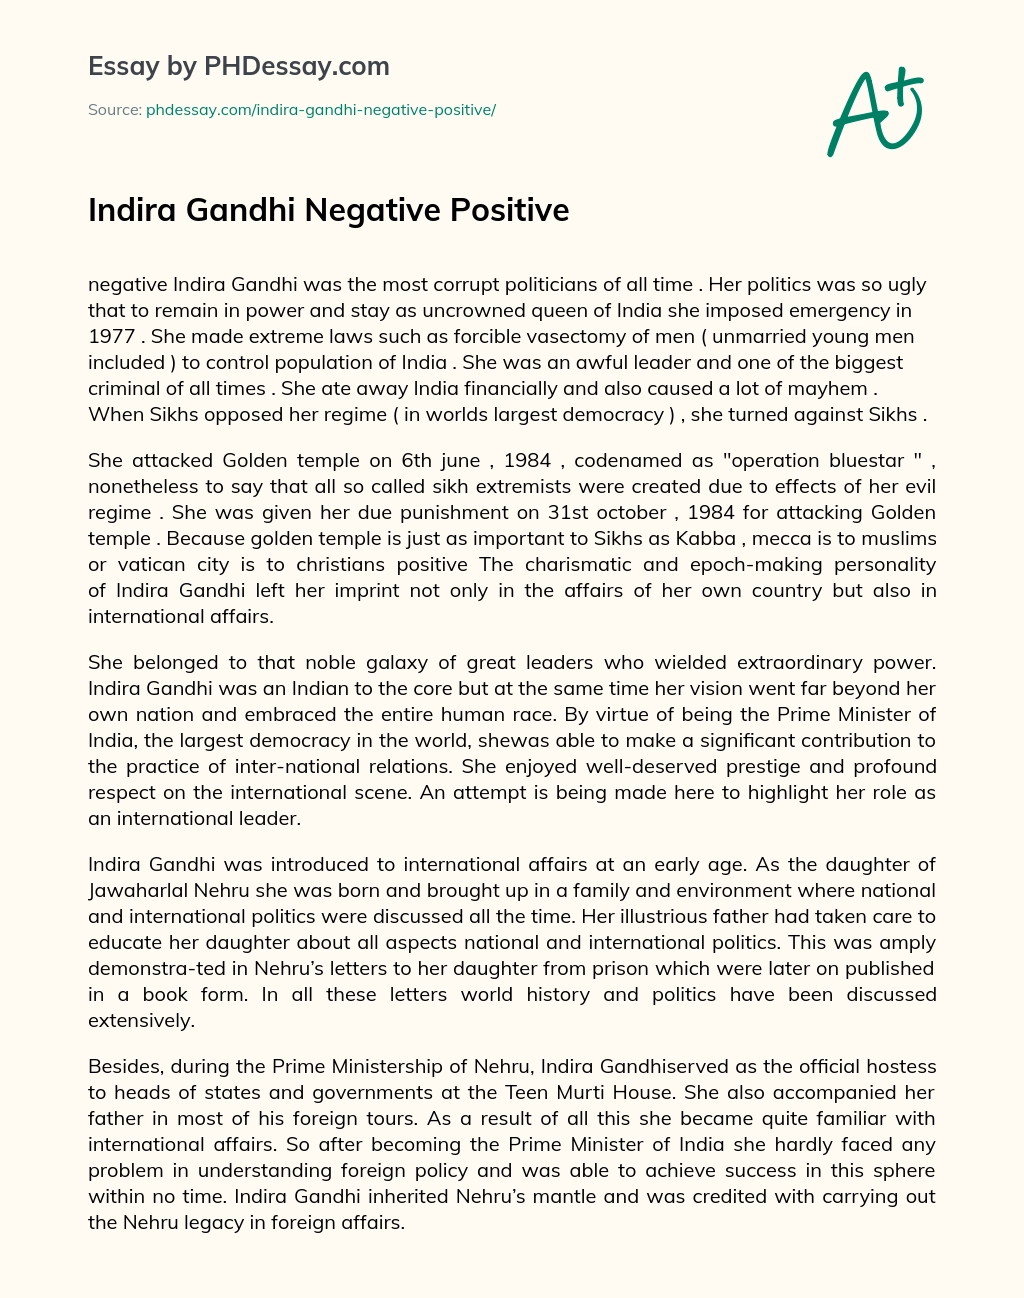 Indira Gandhi Negative Positive essay